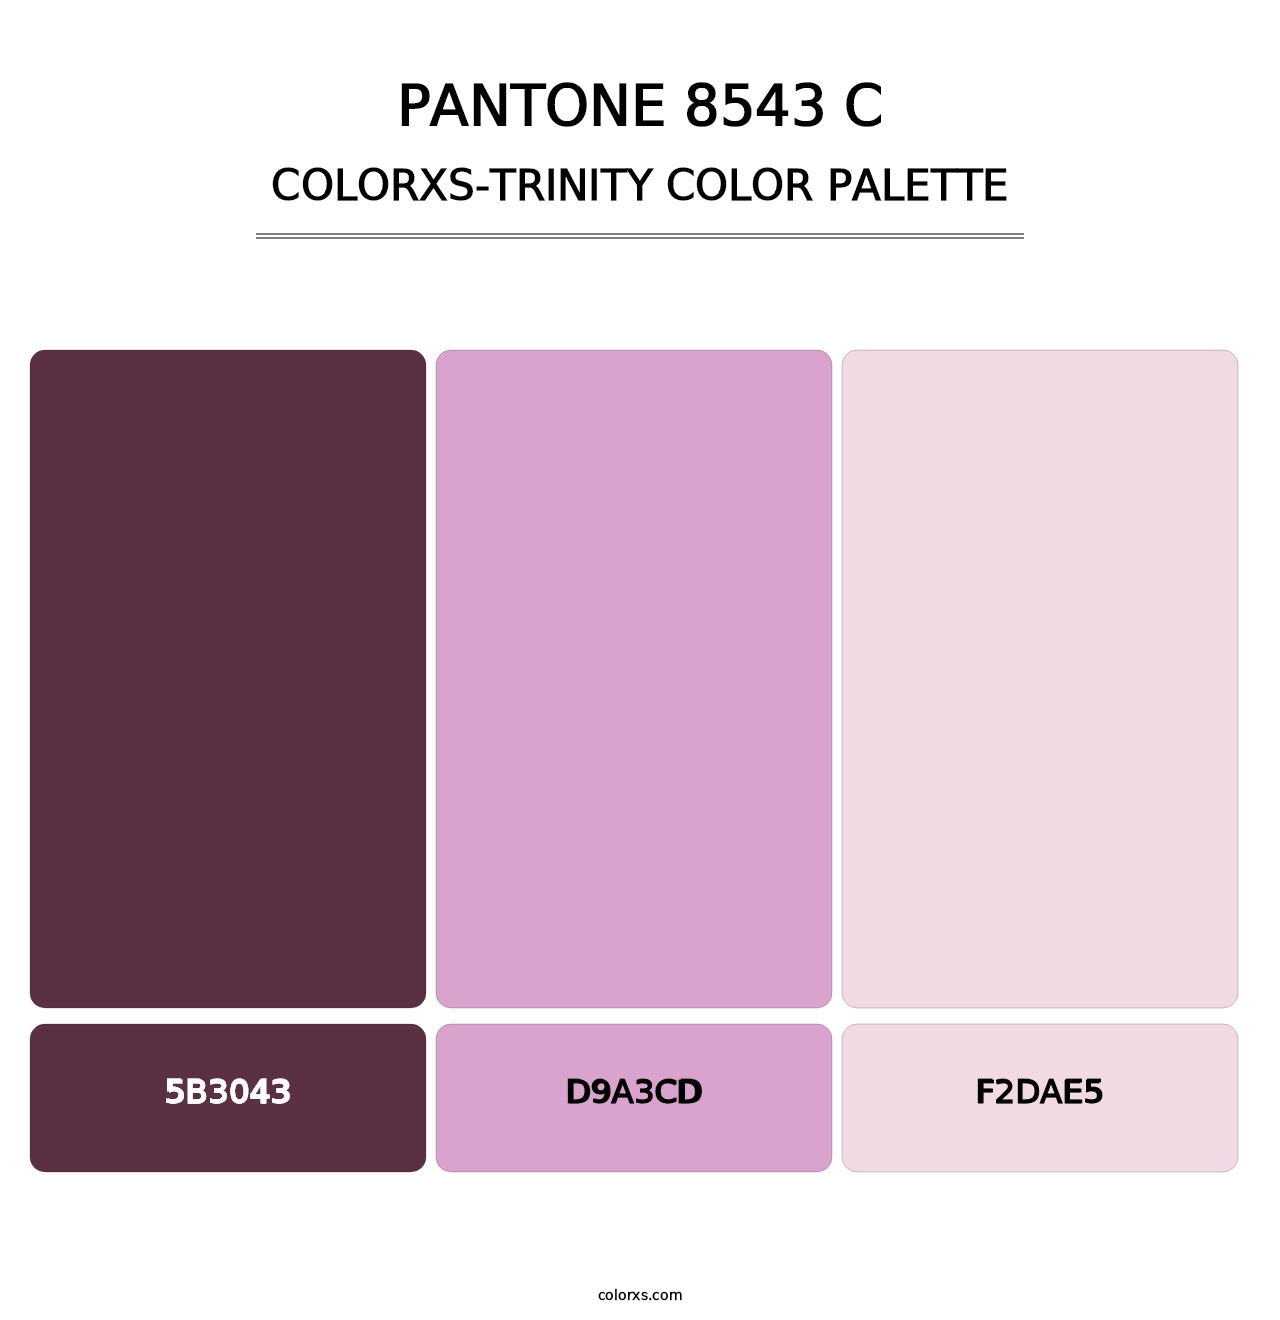 PANTONE 8543 C - Colorxs Trinity Palette